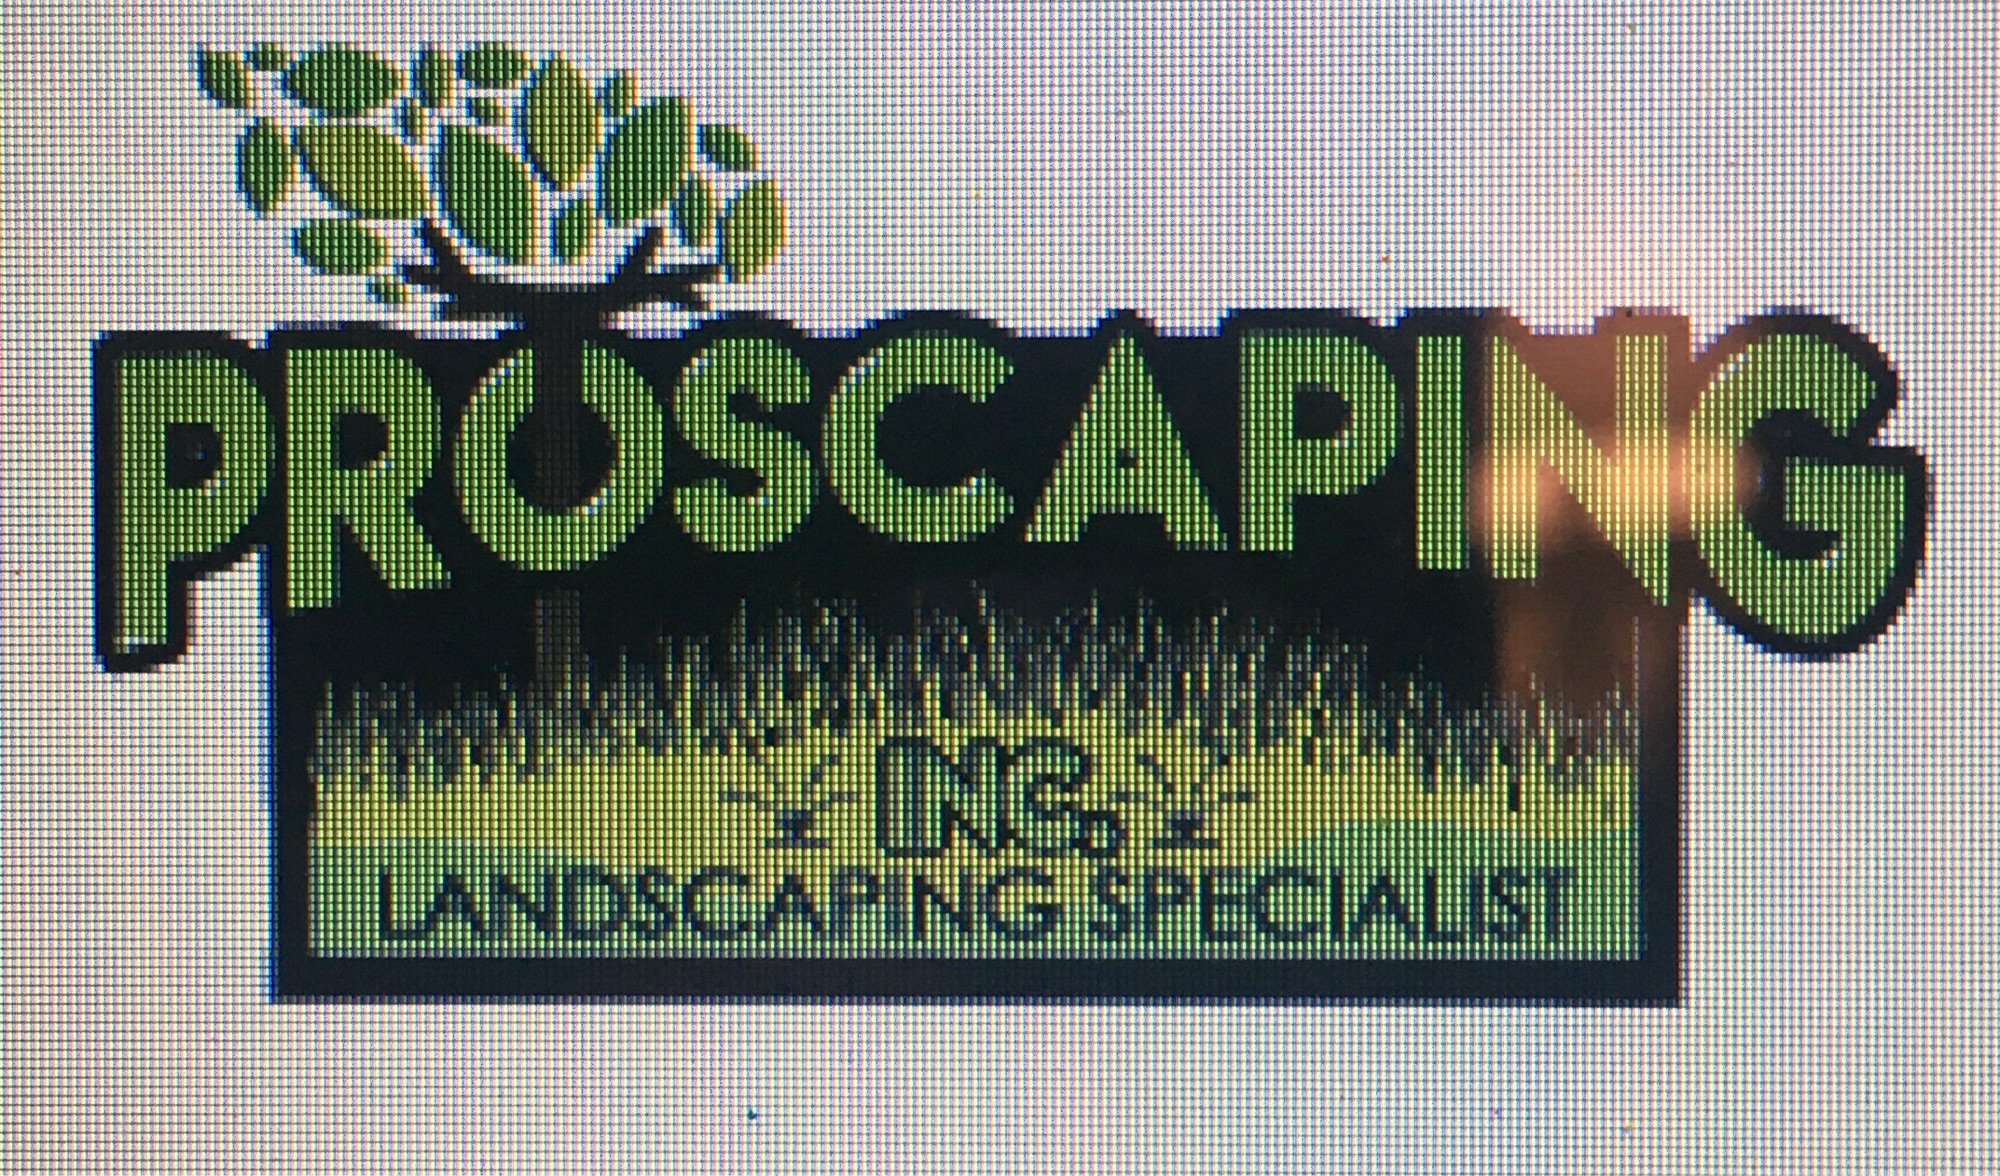 Proscaping, Inc. Logo